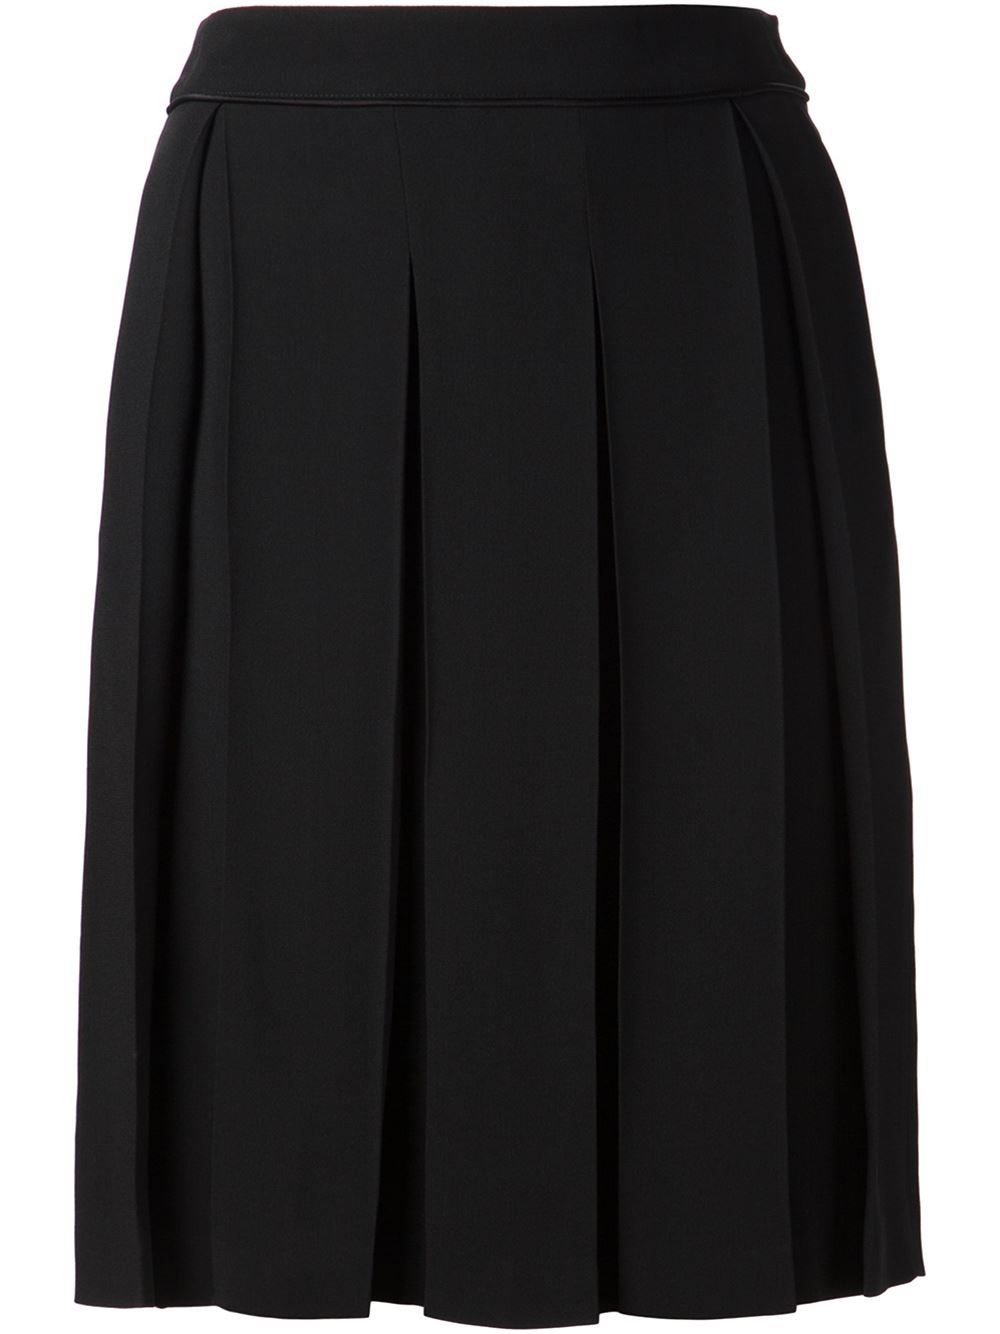 Chalayan Box Pleat Skirt in Black | Lyst